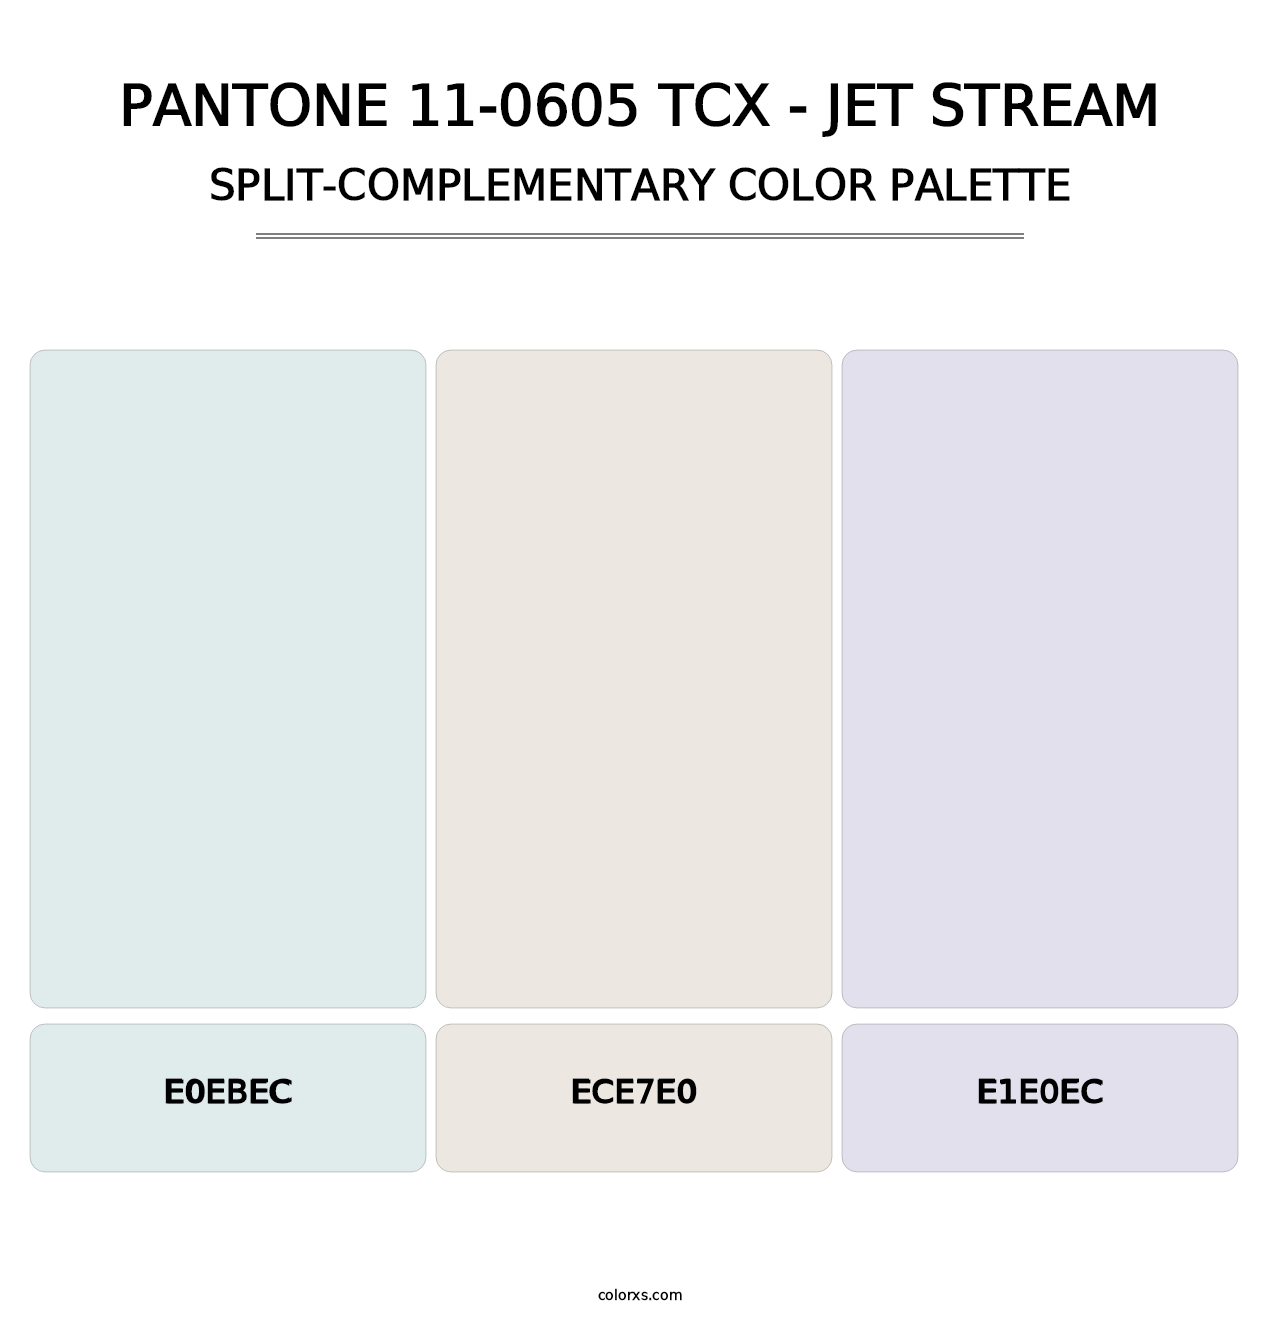 PANTONE 11-0605 TCX - Jet Stream - Split-Complementary Color Palette